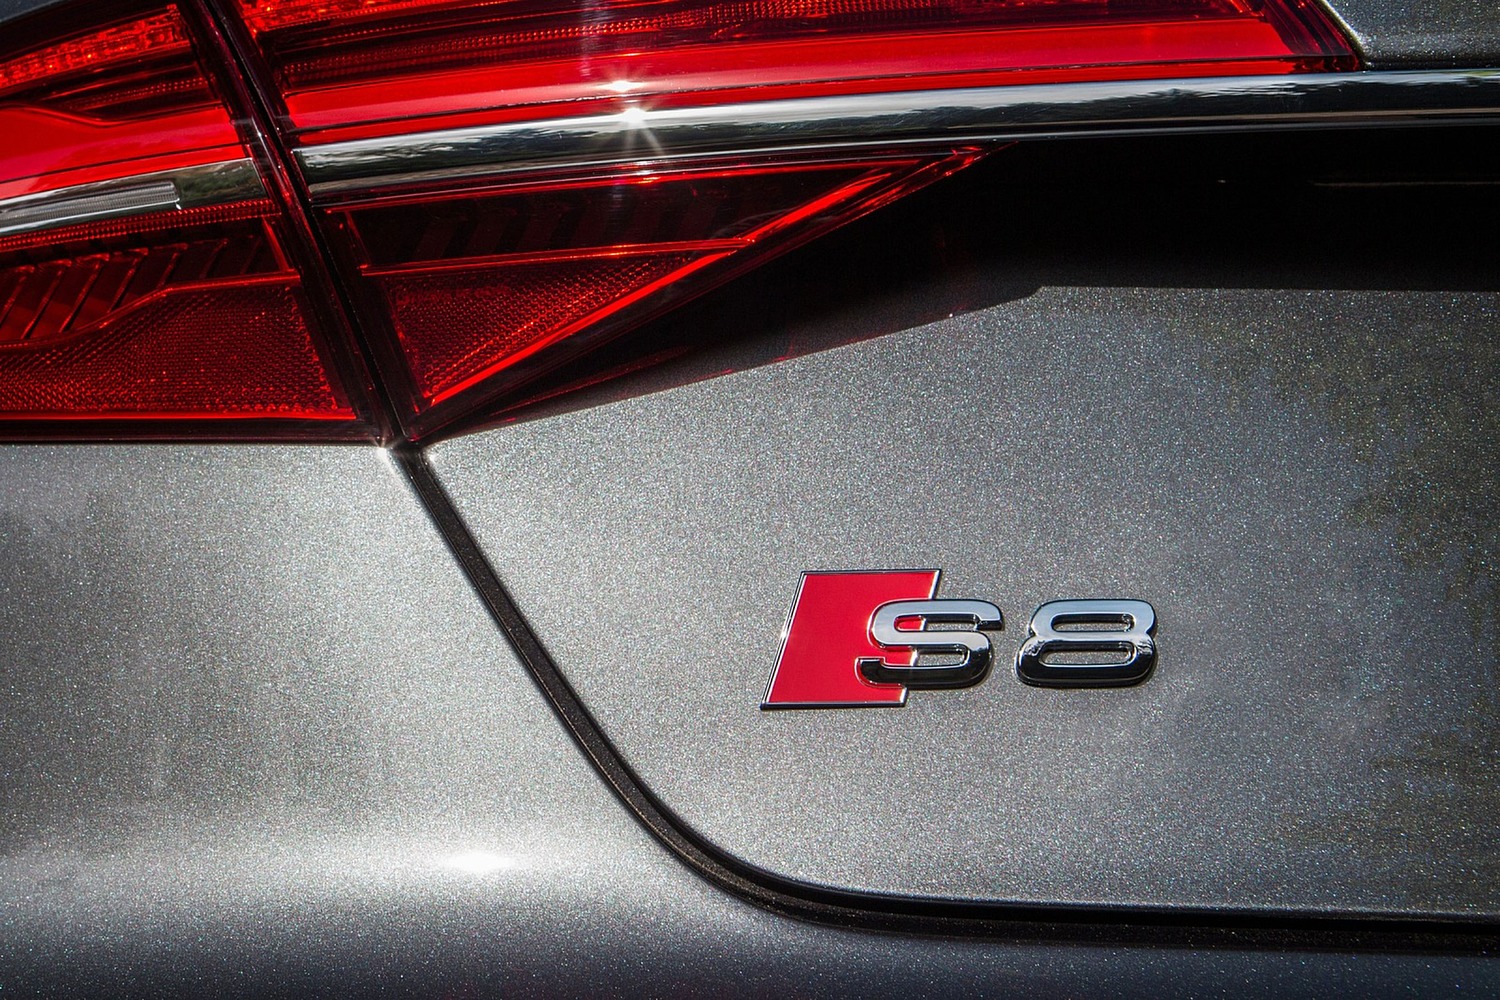 Audi S8 plus quattro Sedan Rear Badge (2017 model year shown)